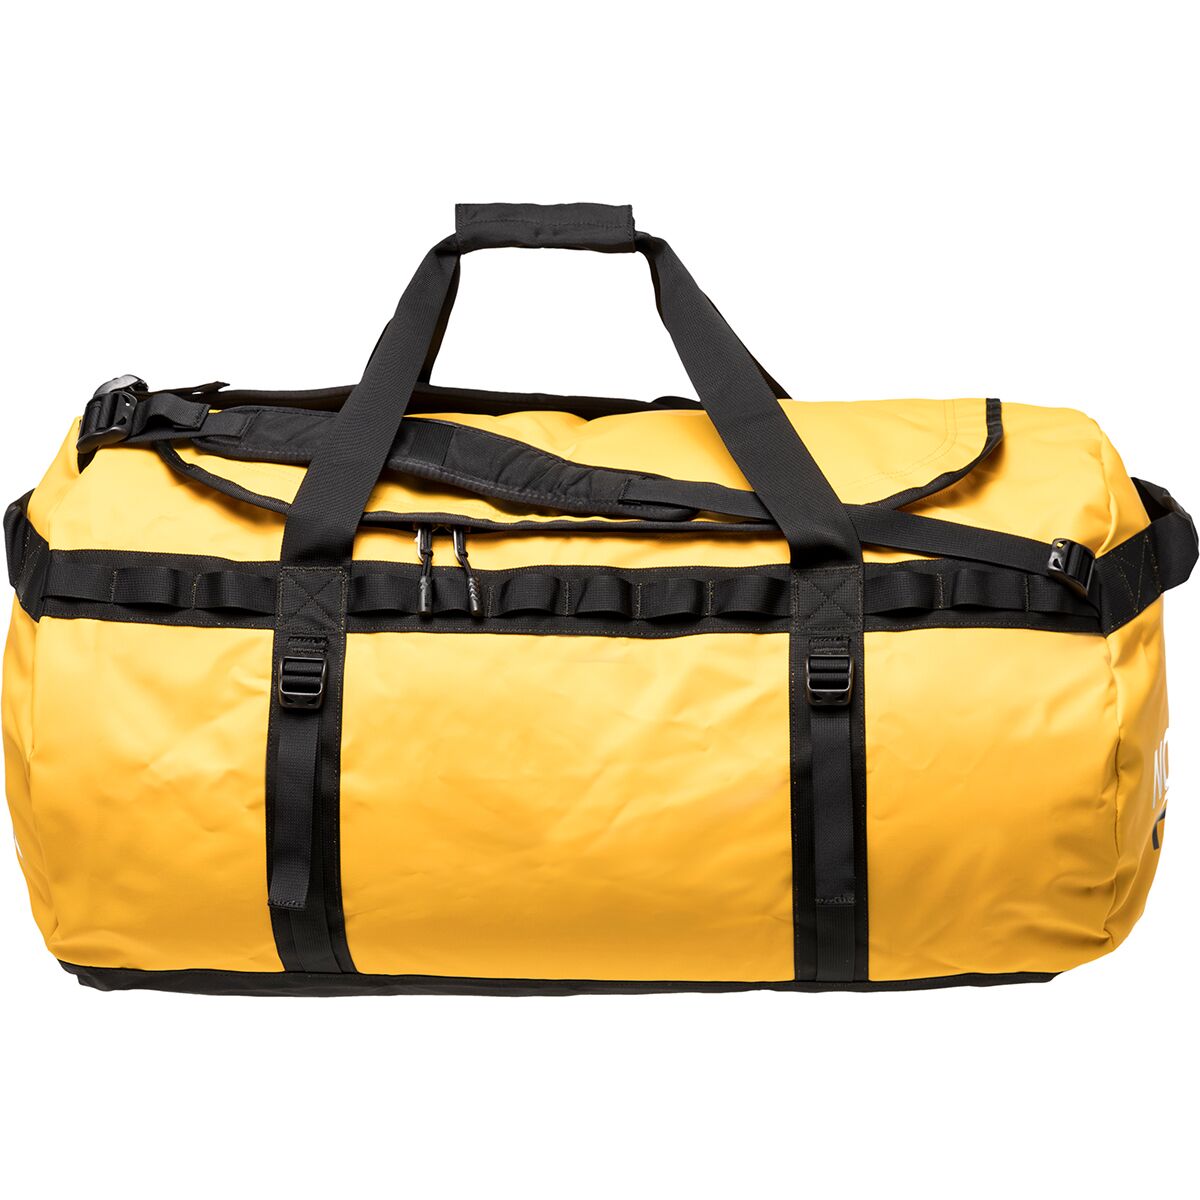 the north face waterproof duffel bag